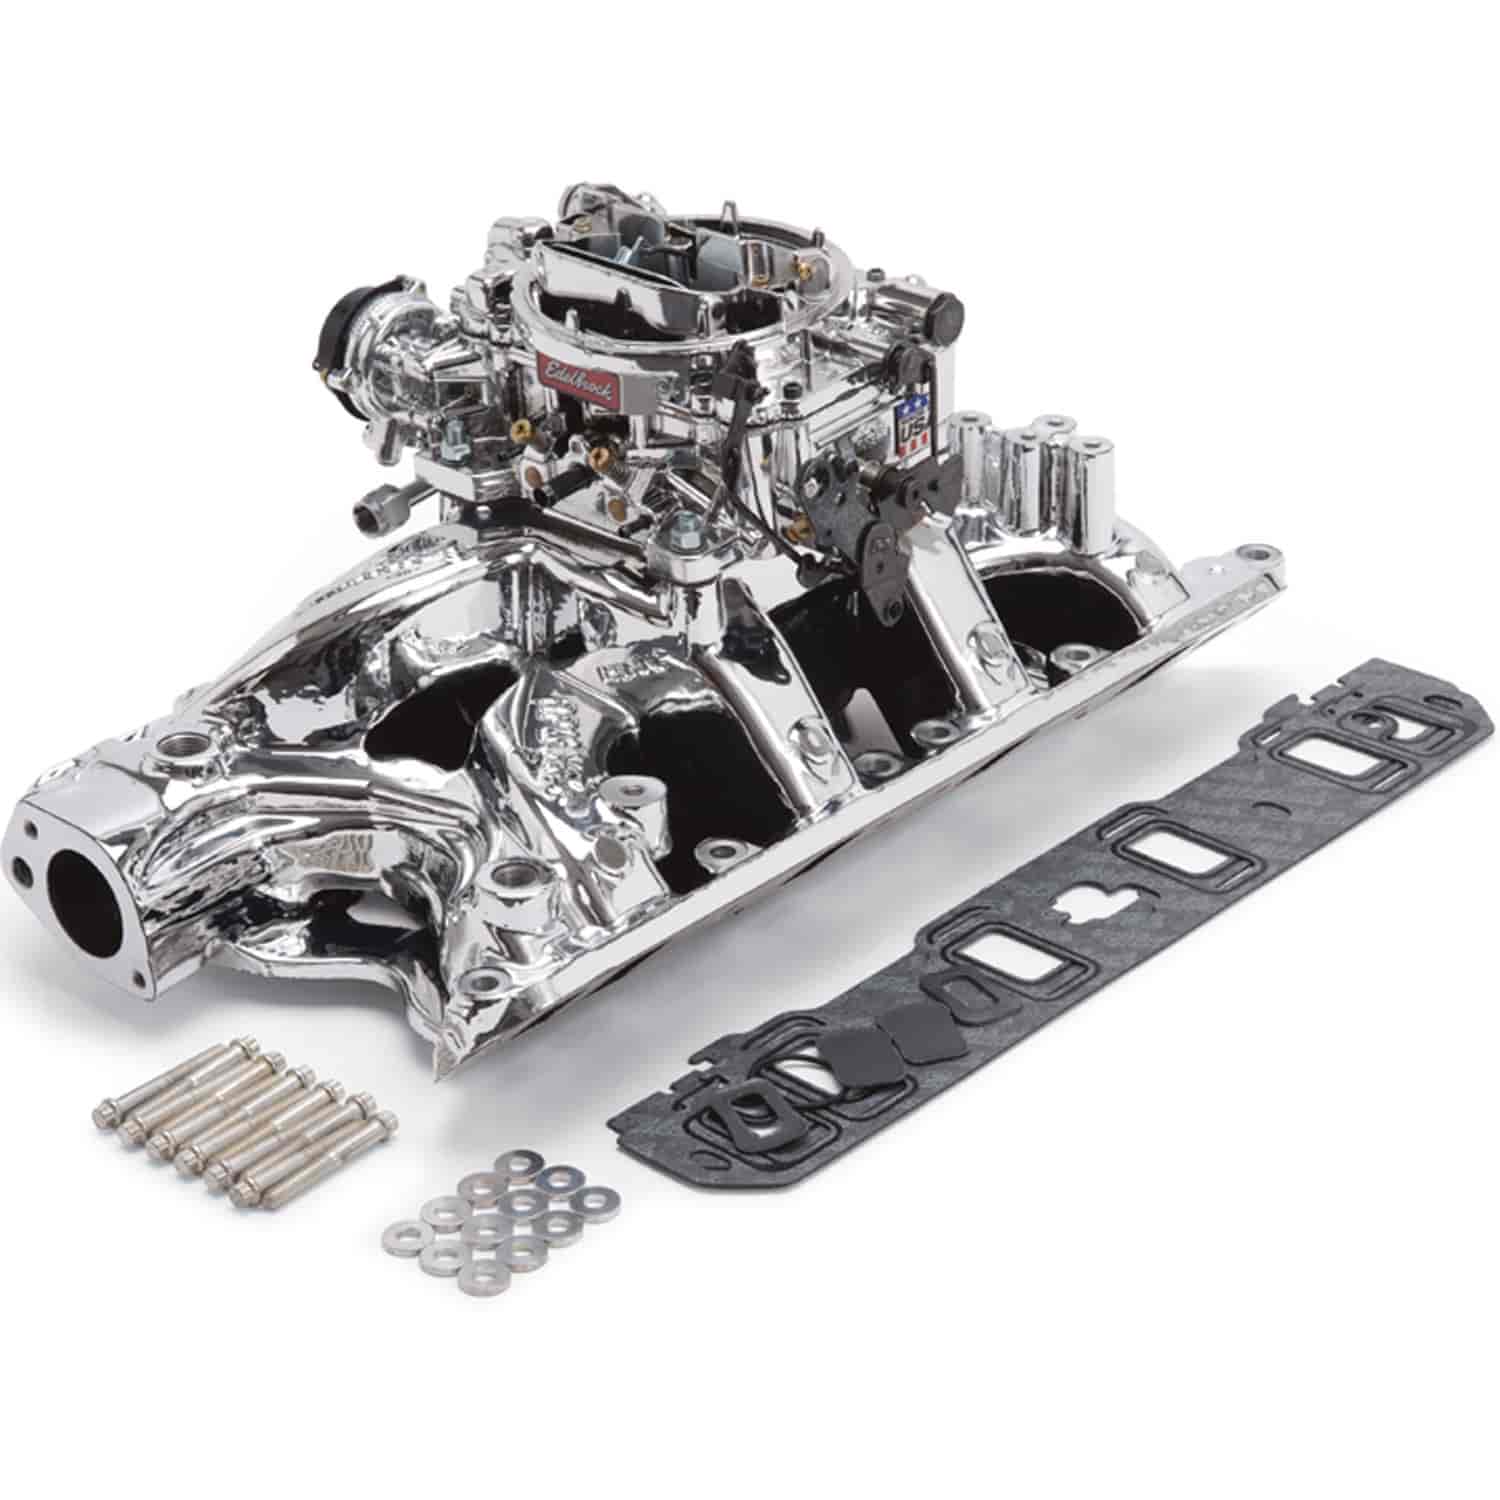 Single-Quad RPM Air-Gap Manifold and Carburetor Kit for Small Block Ford 351W with Endurashine Finish